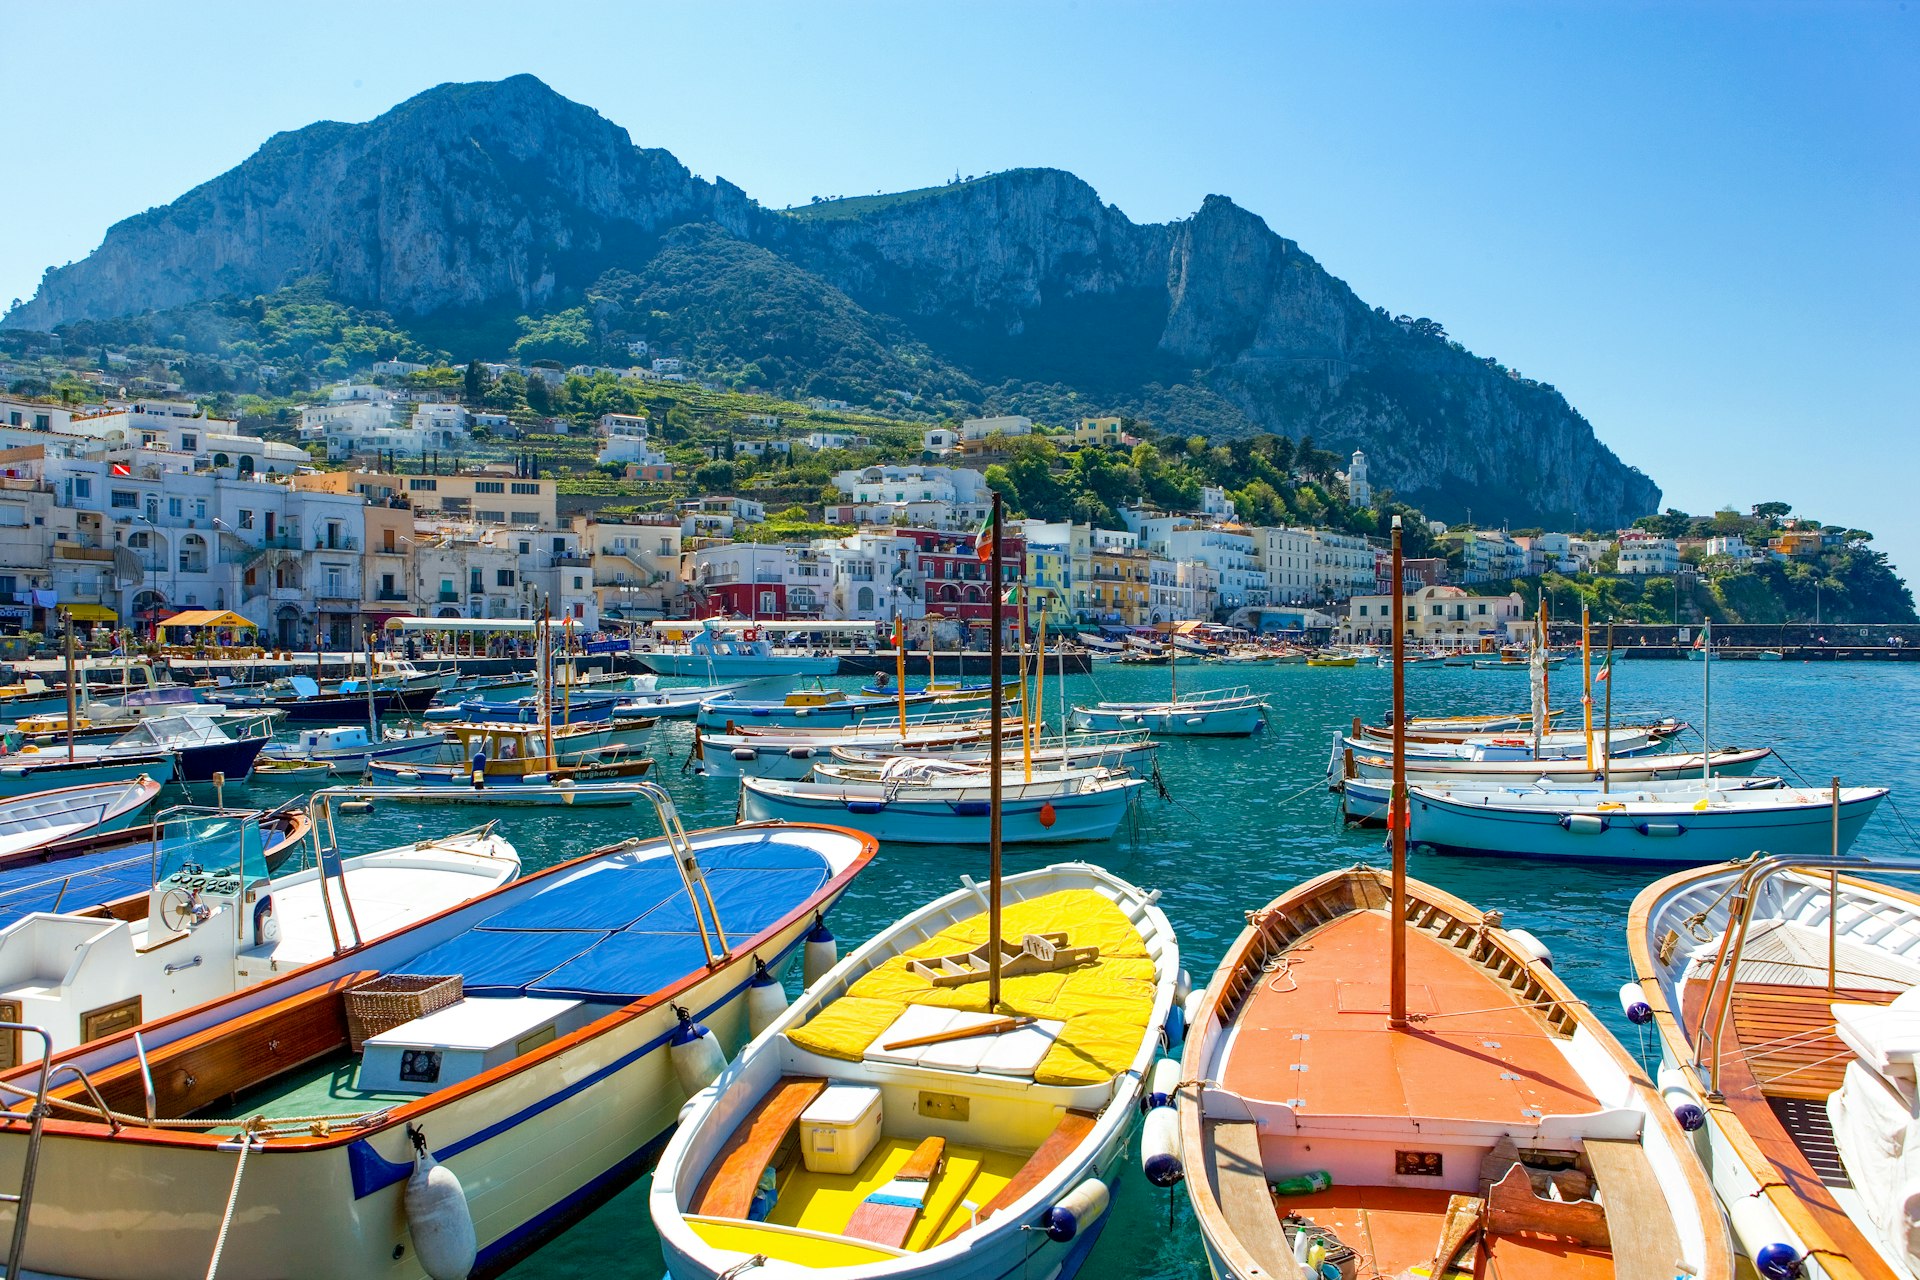 Colorful boats sit in the marina in Capri